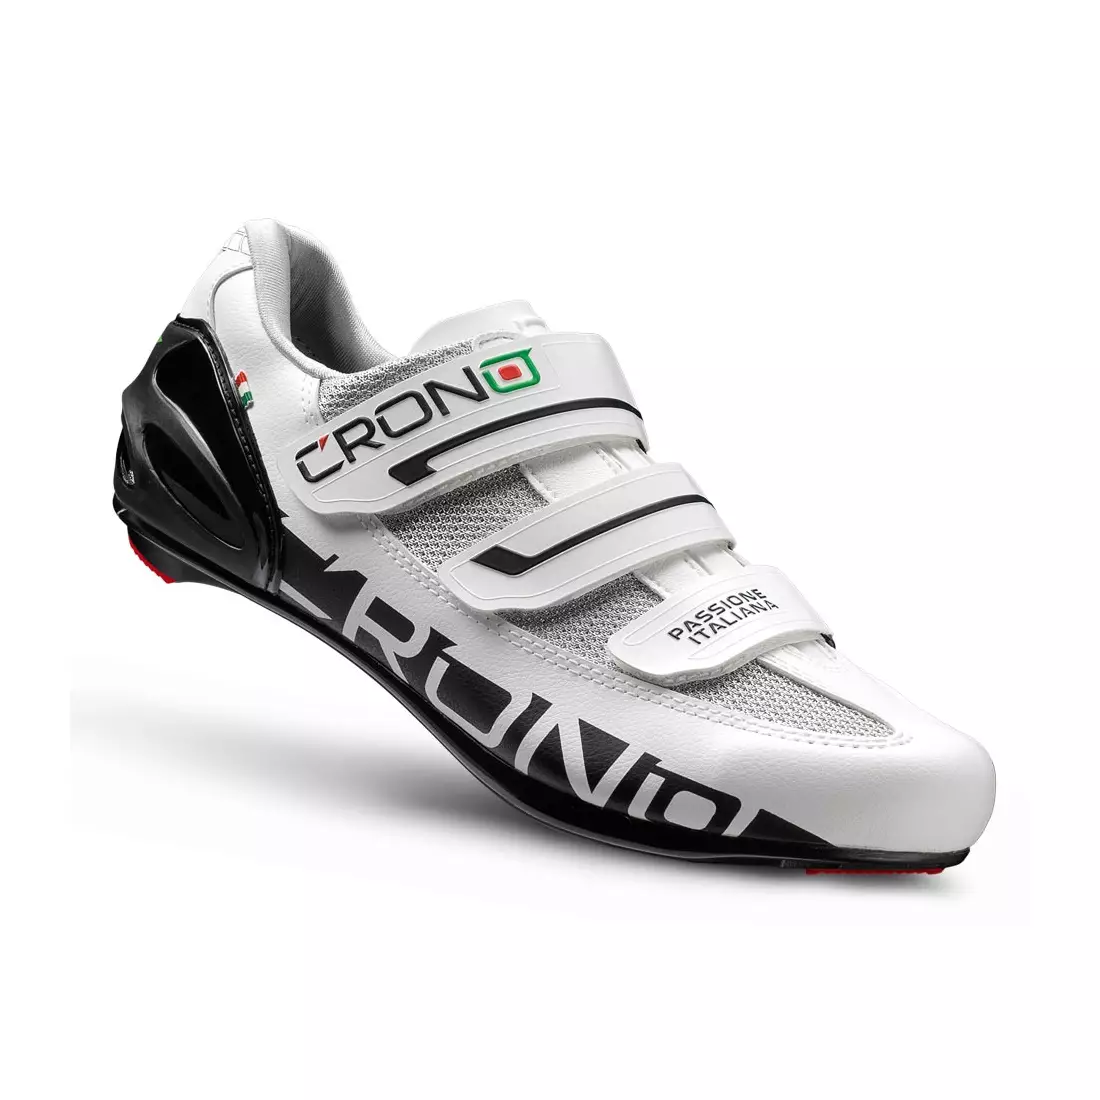 CRONO PERLA CARBON - road cycling shoes - color: White